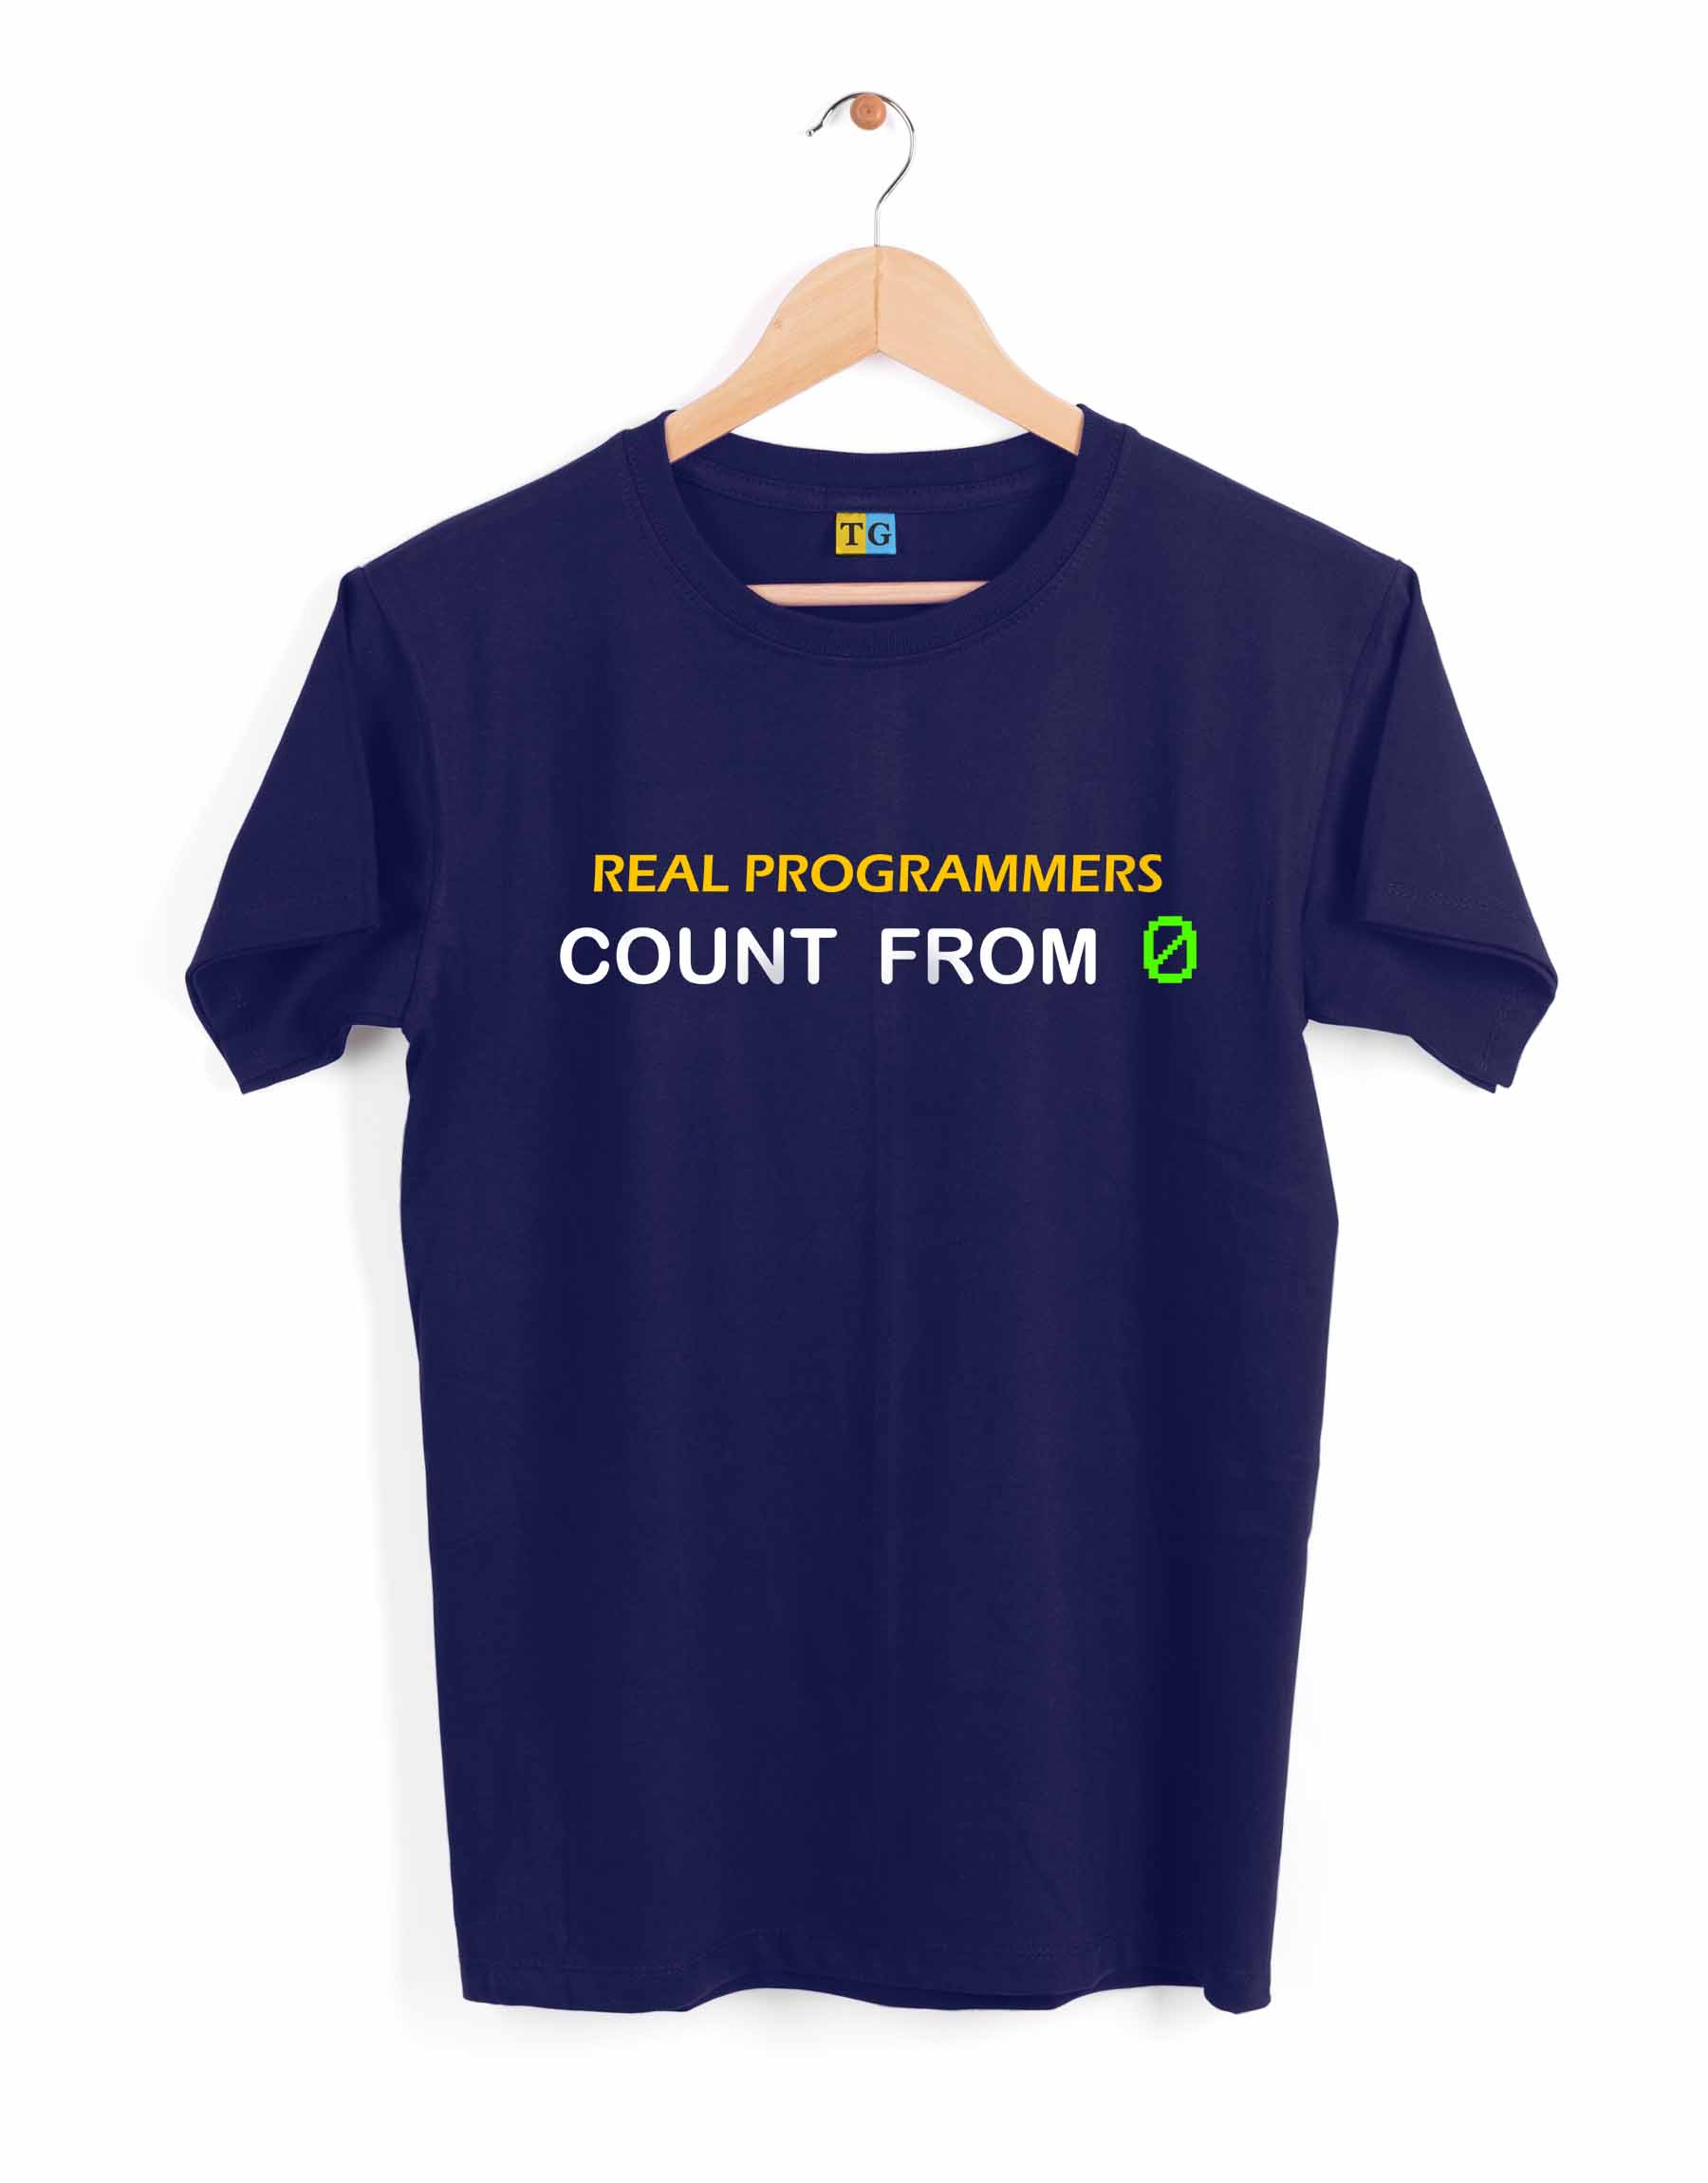 Real Programmers Printed T-Shirt - 499.00 - TEEGURUJI - Free Shipping